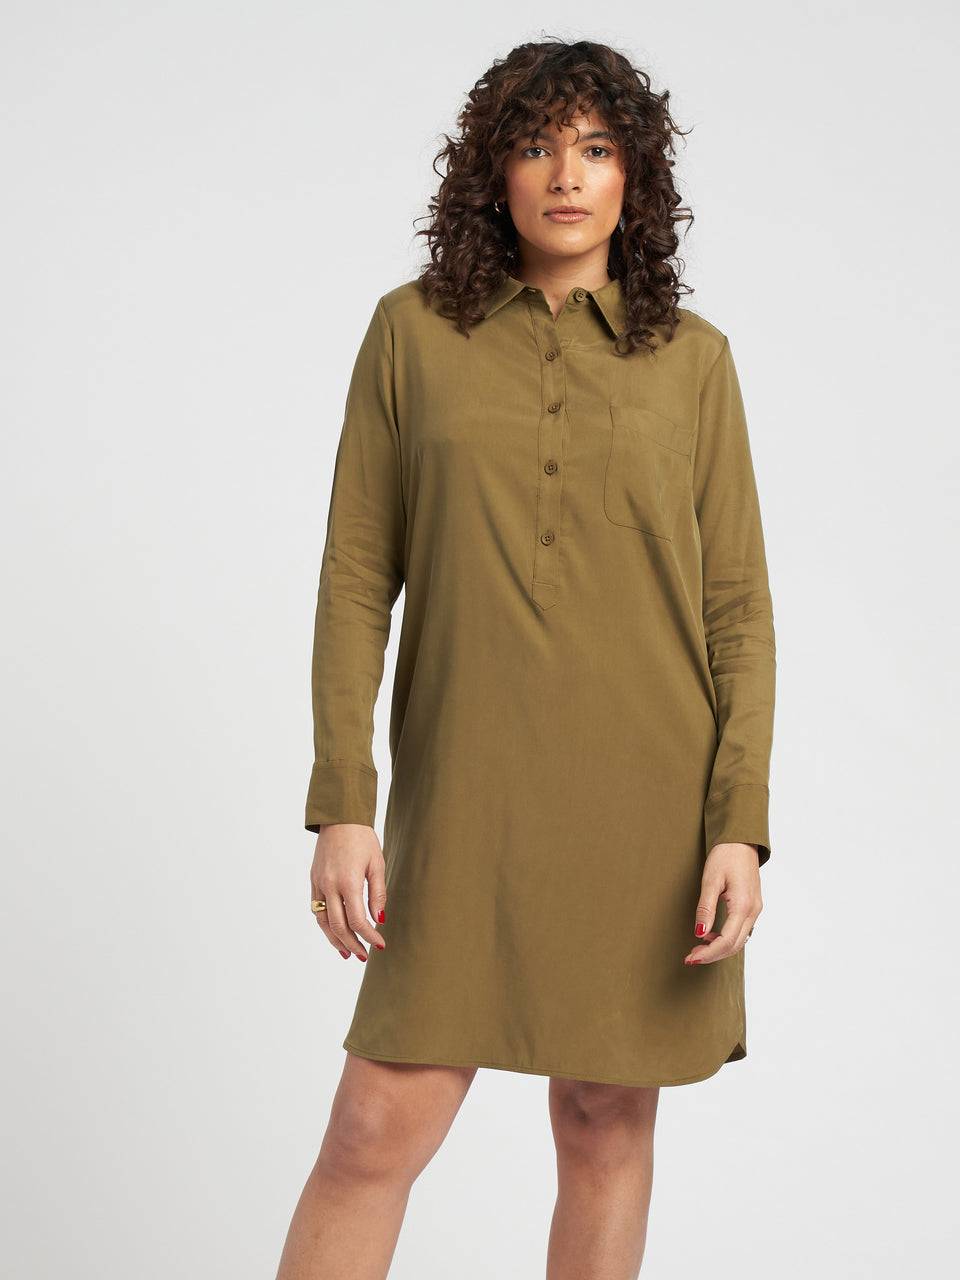 Cupro Rubicon Shirt Dress - Olive Zoom image 0